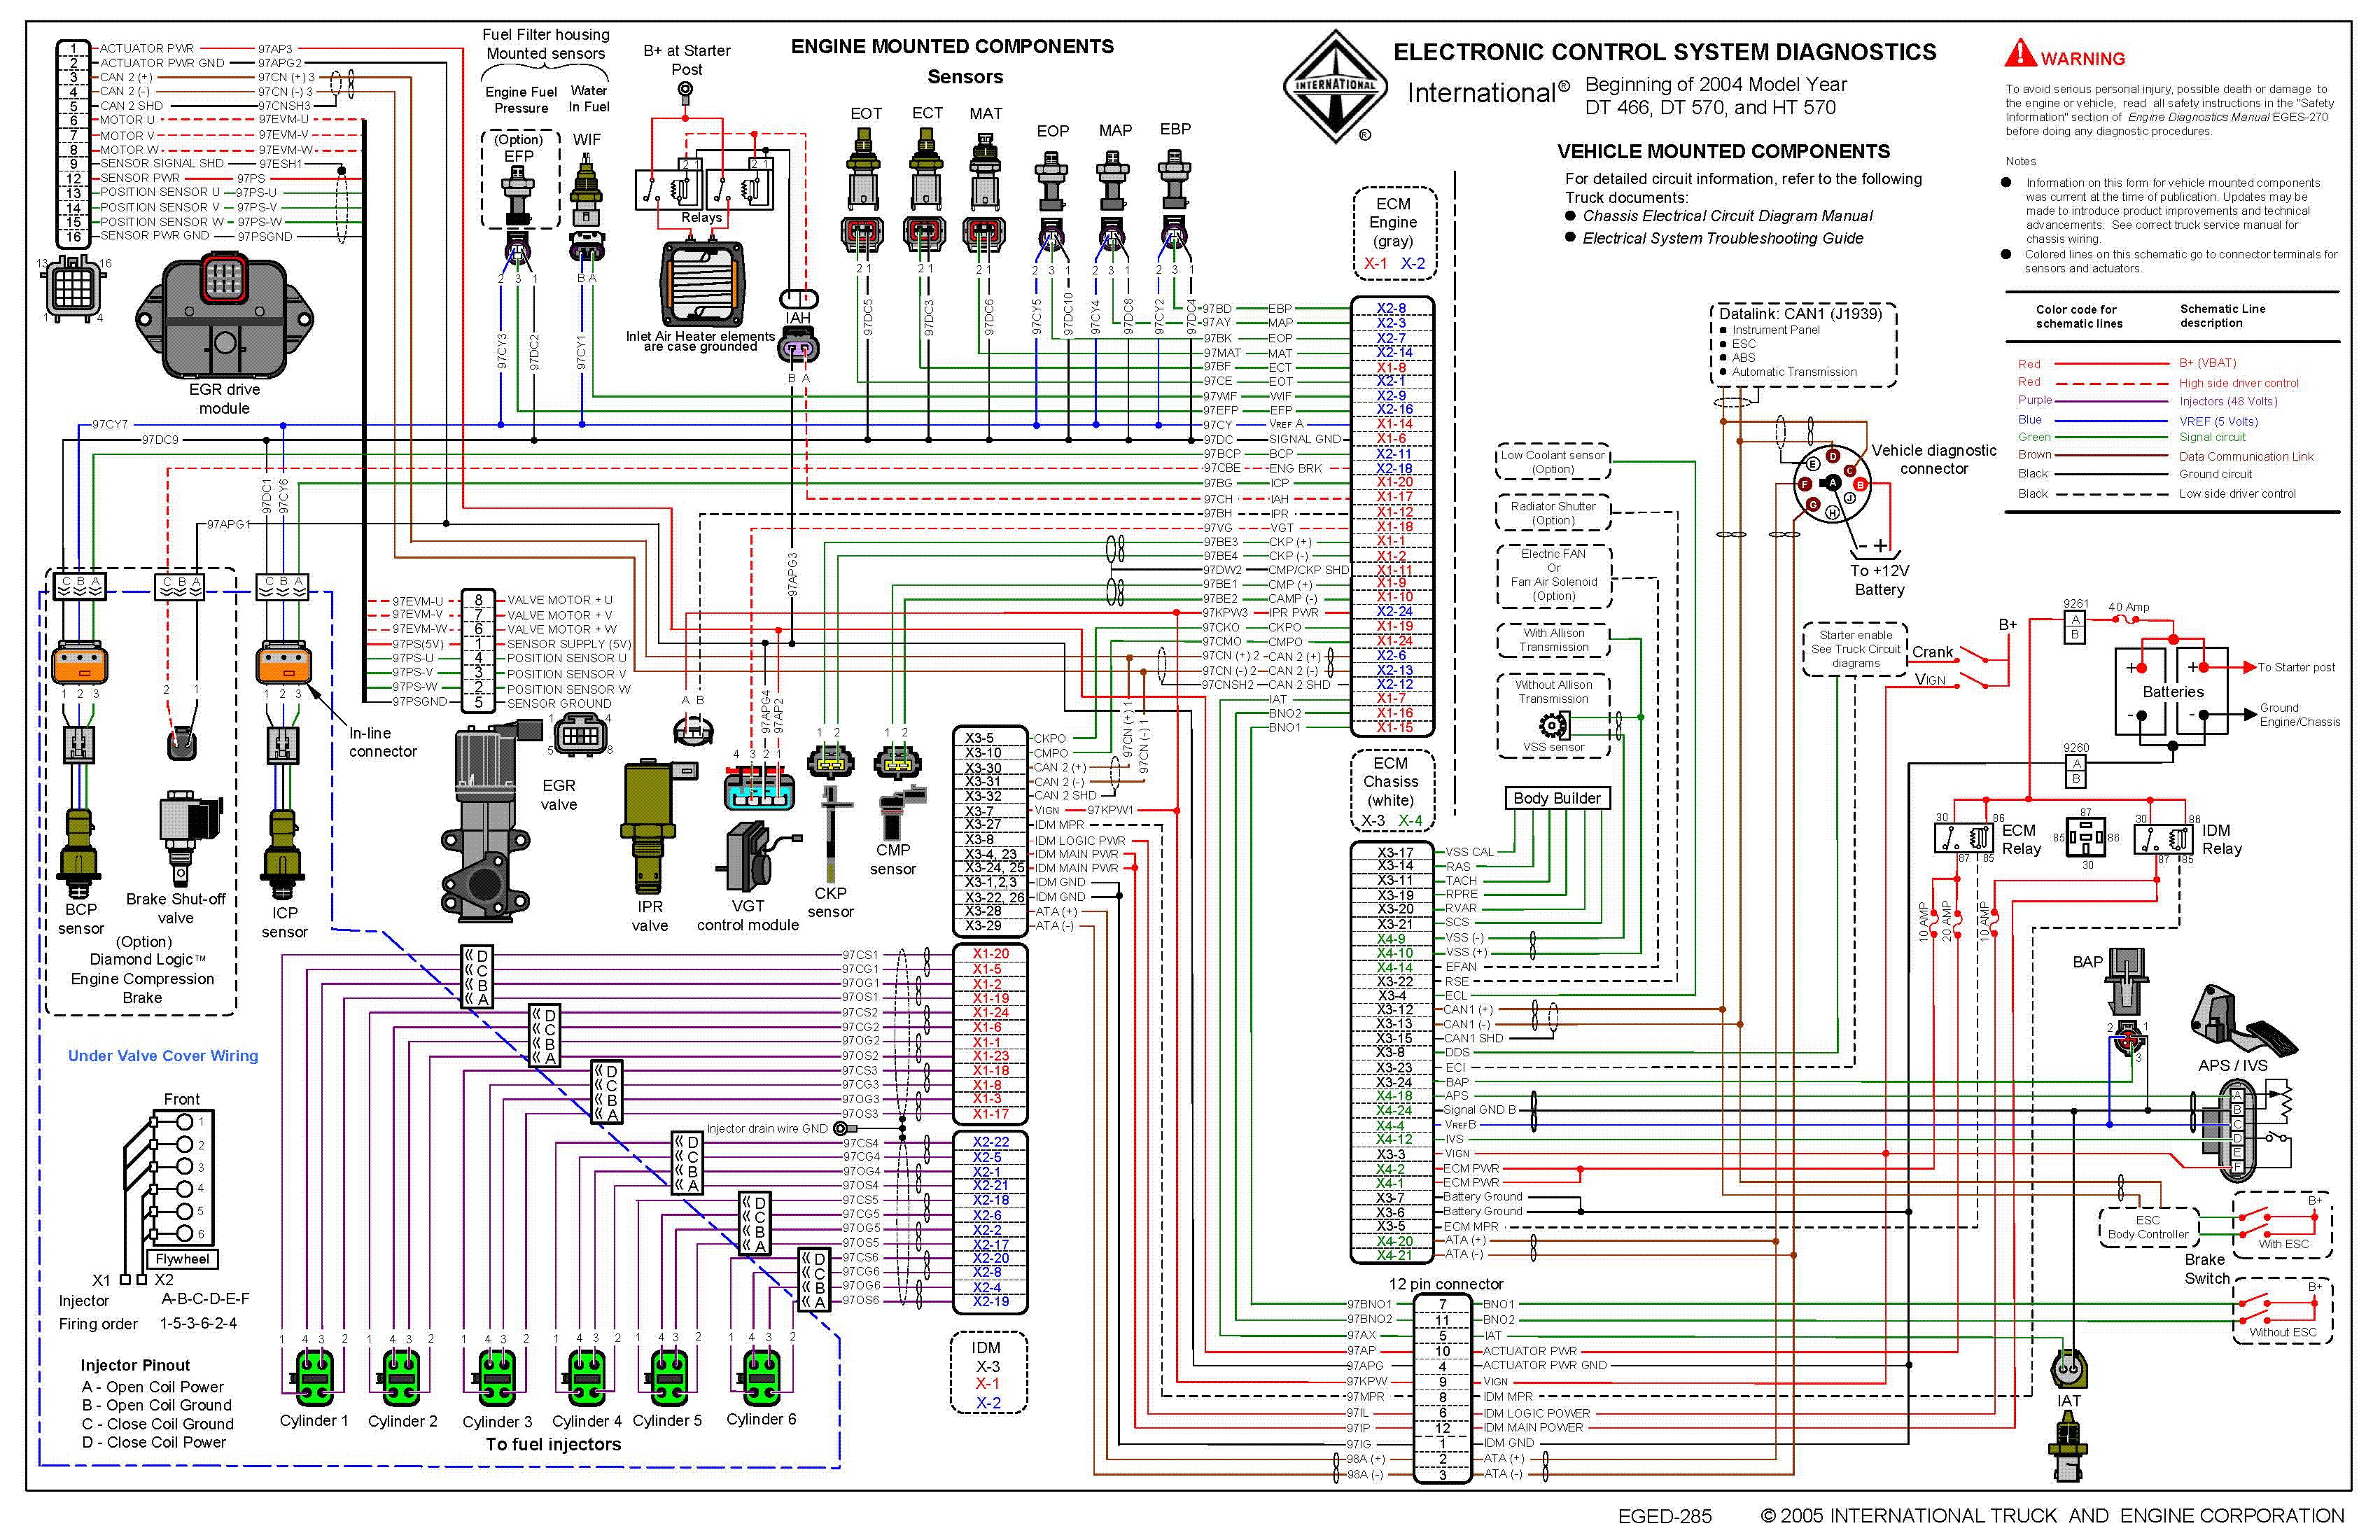 ihc truck wiring diagrams wiring diagrams international 7700 truck wiring diagrams